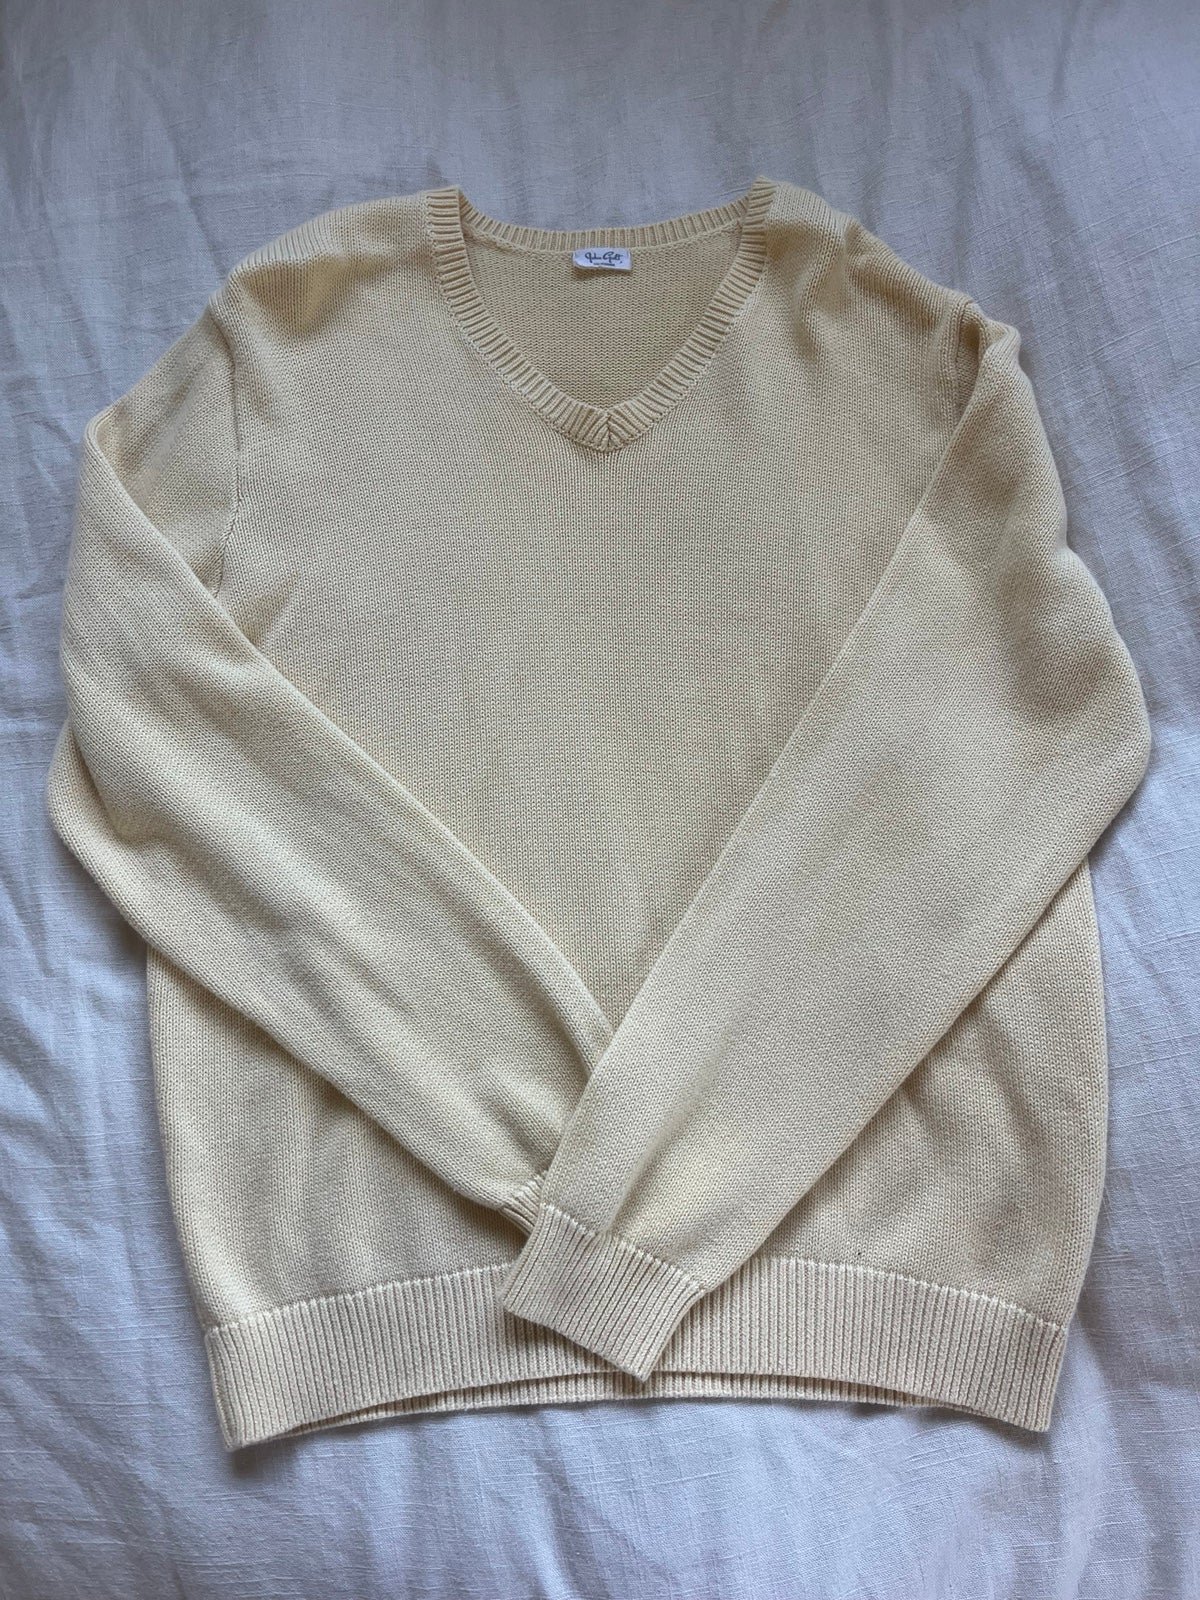 The Best Seller Brandy Melville Brianna sweater ImeTdUR